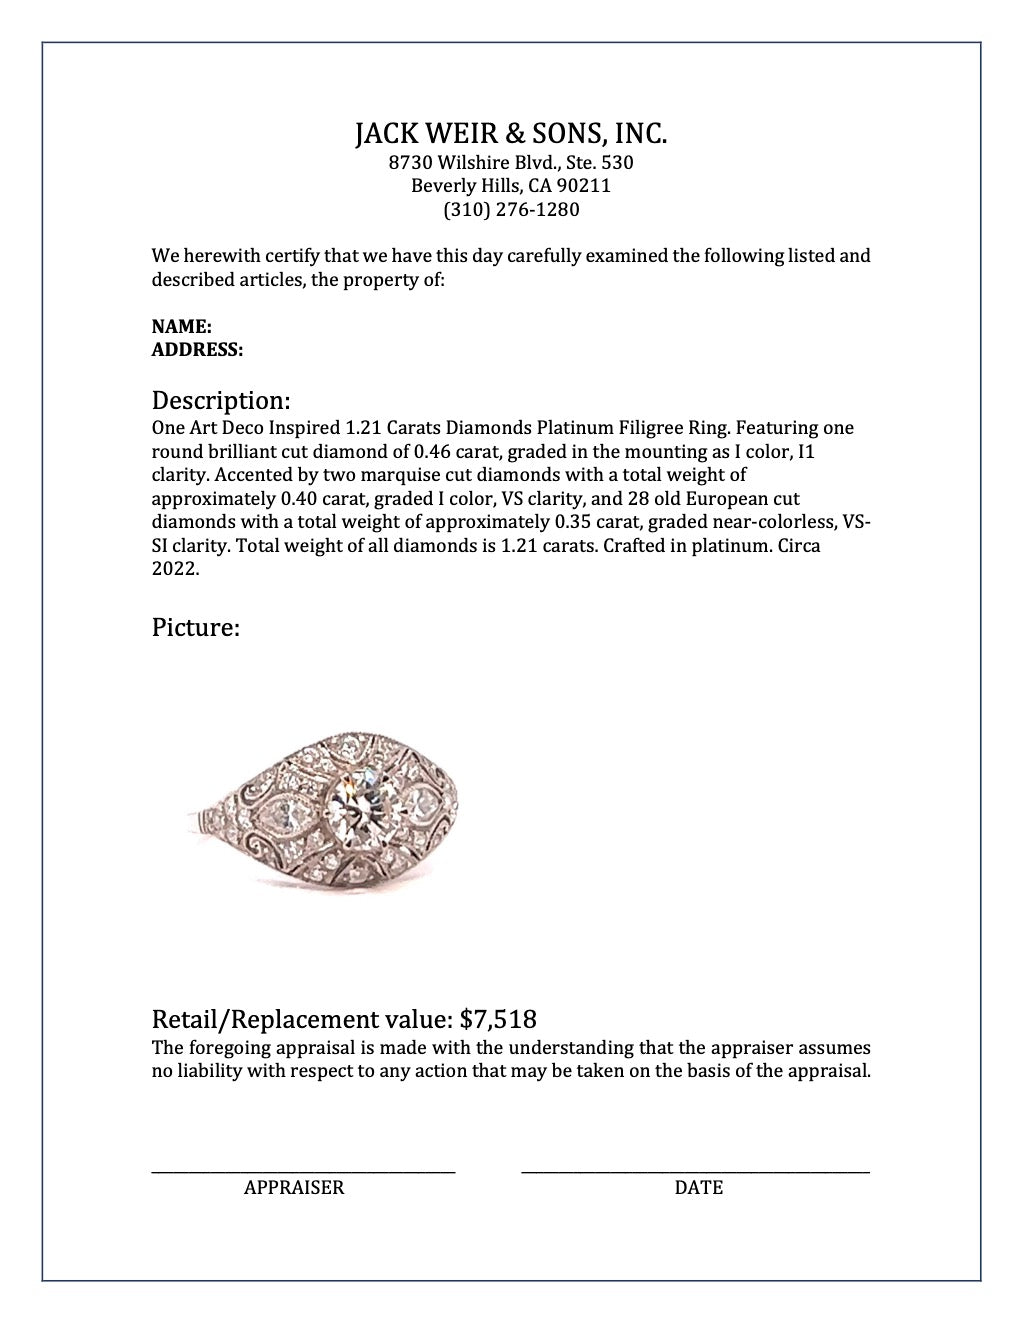 Art Deco Inspired 1.21 Carats Diamonds Platinum Filigree Ring Rings Jack Weir & Sons   